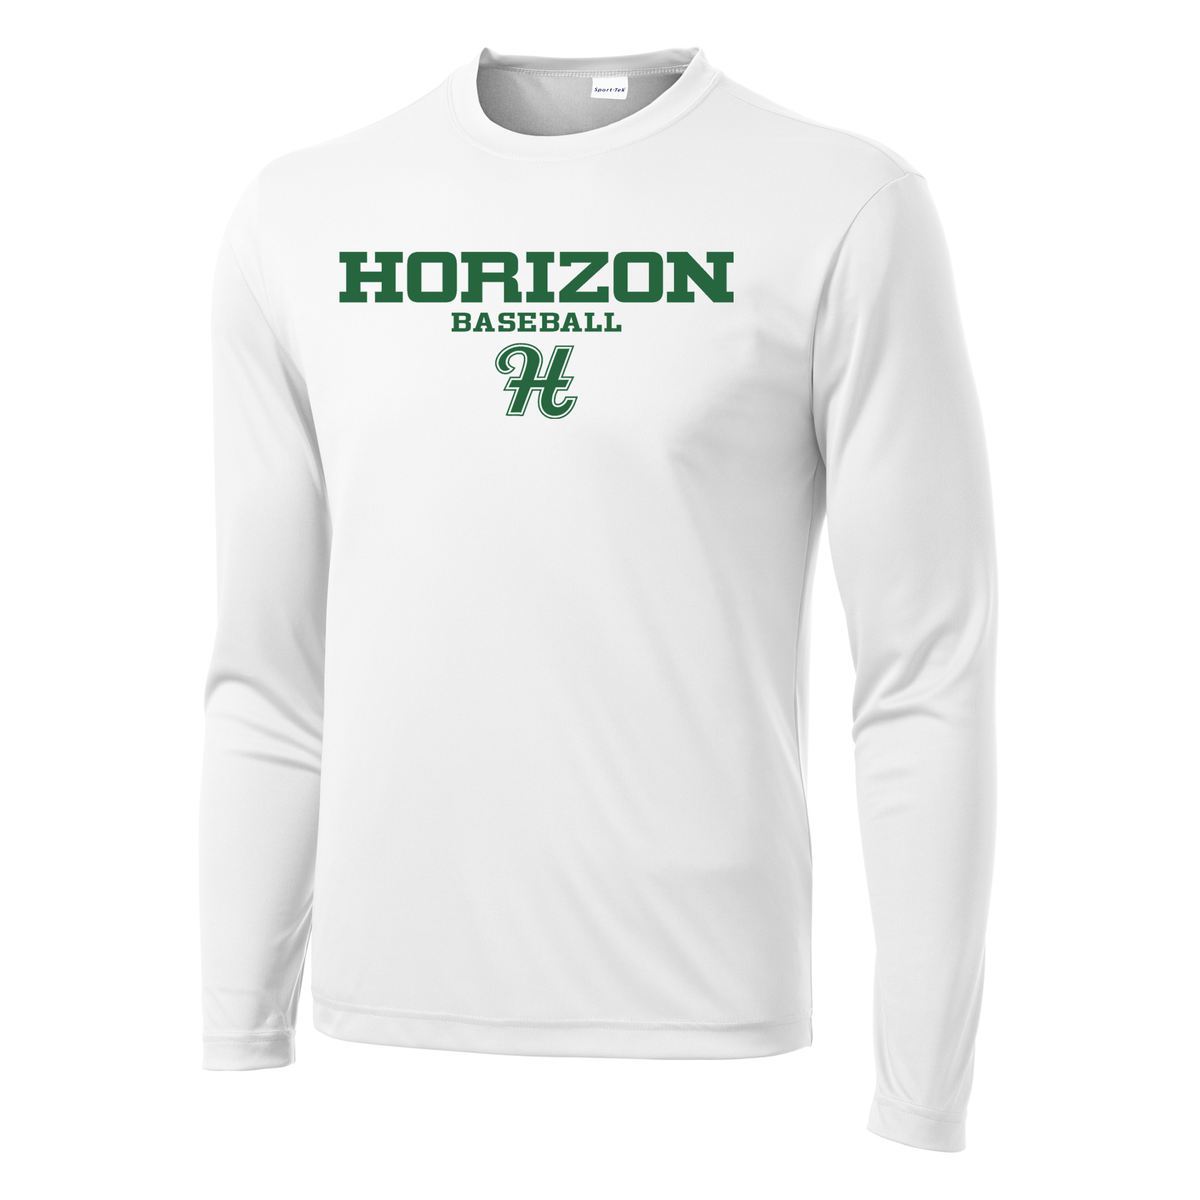 Horizon Baseball Long Sleeve Performance Shirt